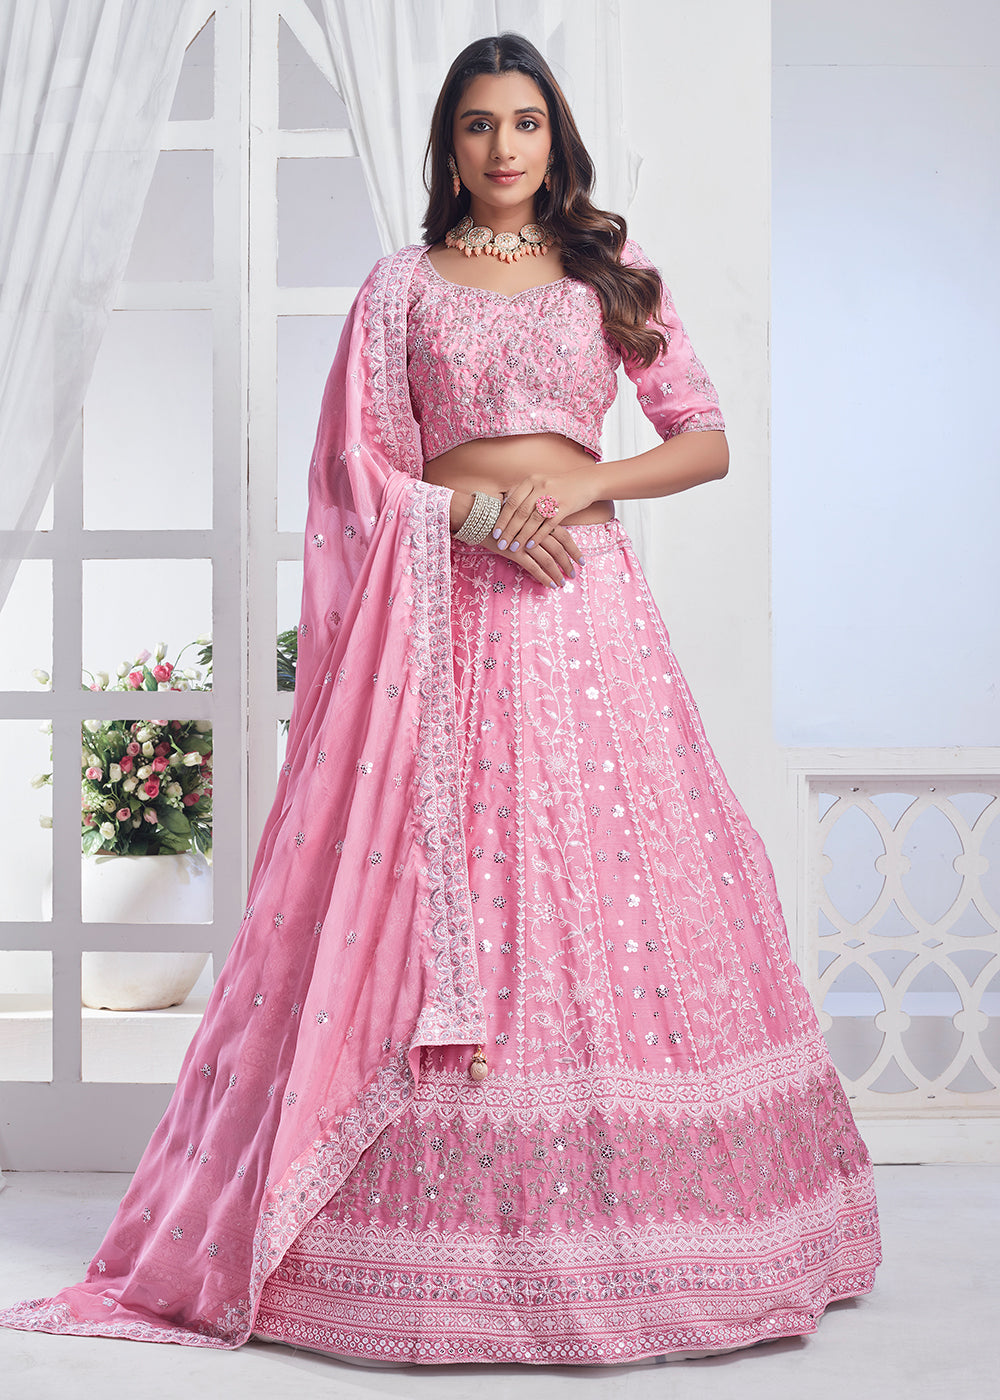 Buy Now Pink Designer Style Embroidered Wedding Lehenga Choli Online in USA, UK, Canada & Worldwide at Empress Clothing